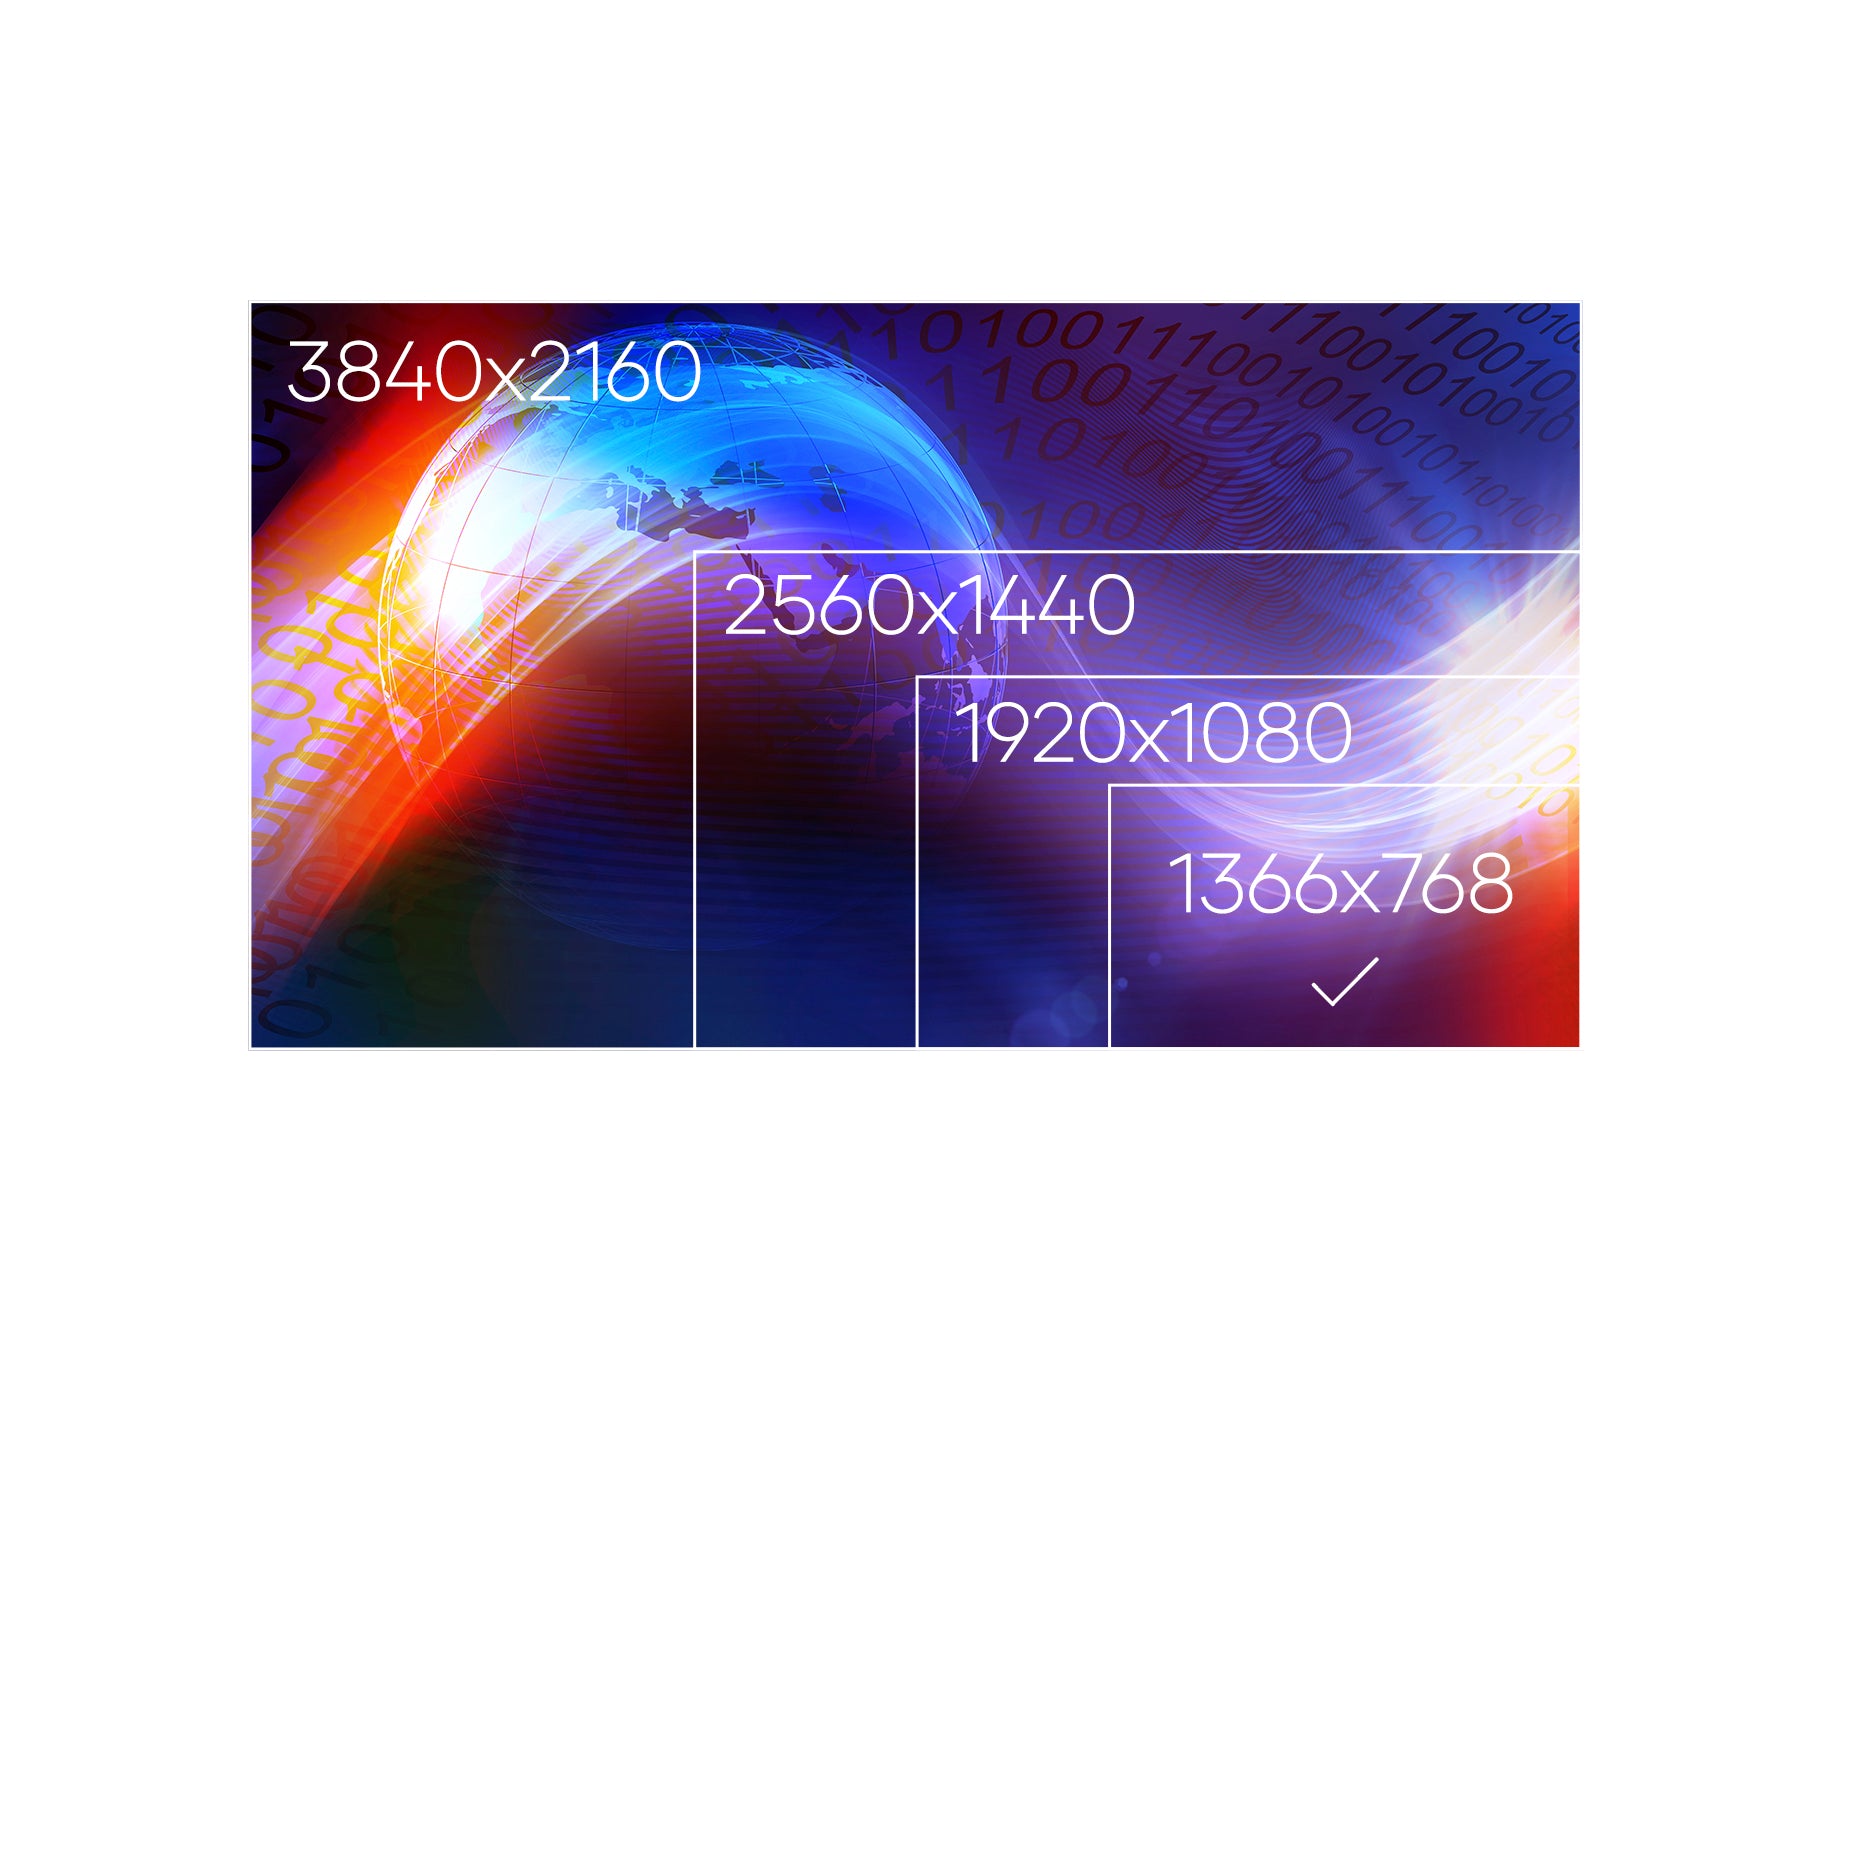 Samsung XE303C12-H01 LCD LED 11.6" Screen Display Panel WXGA HD Matte